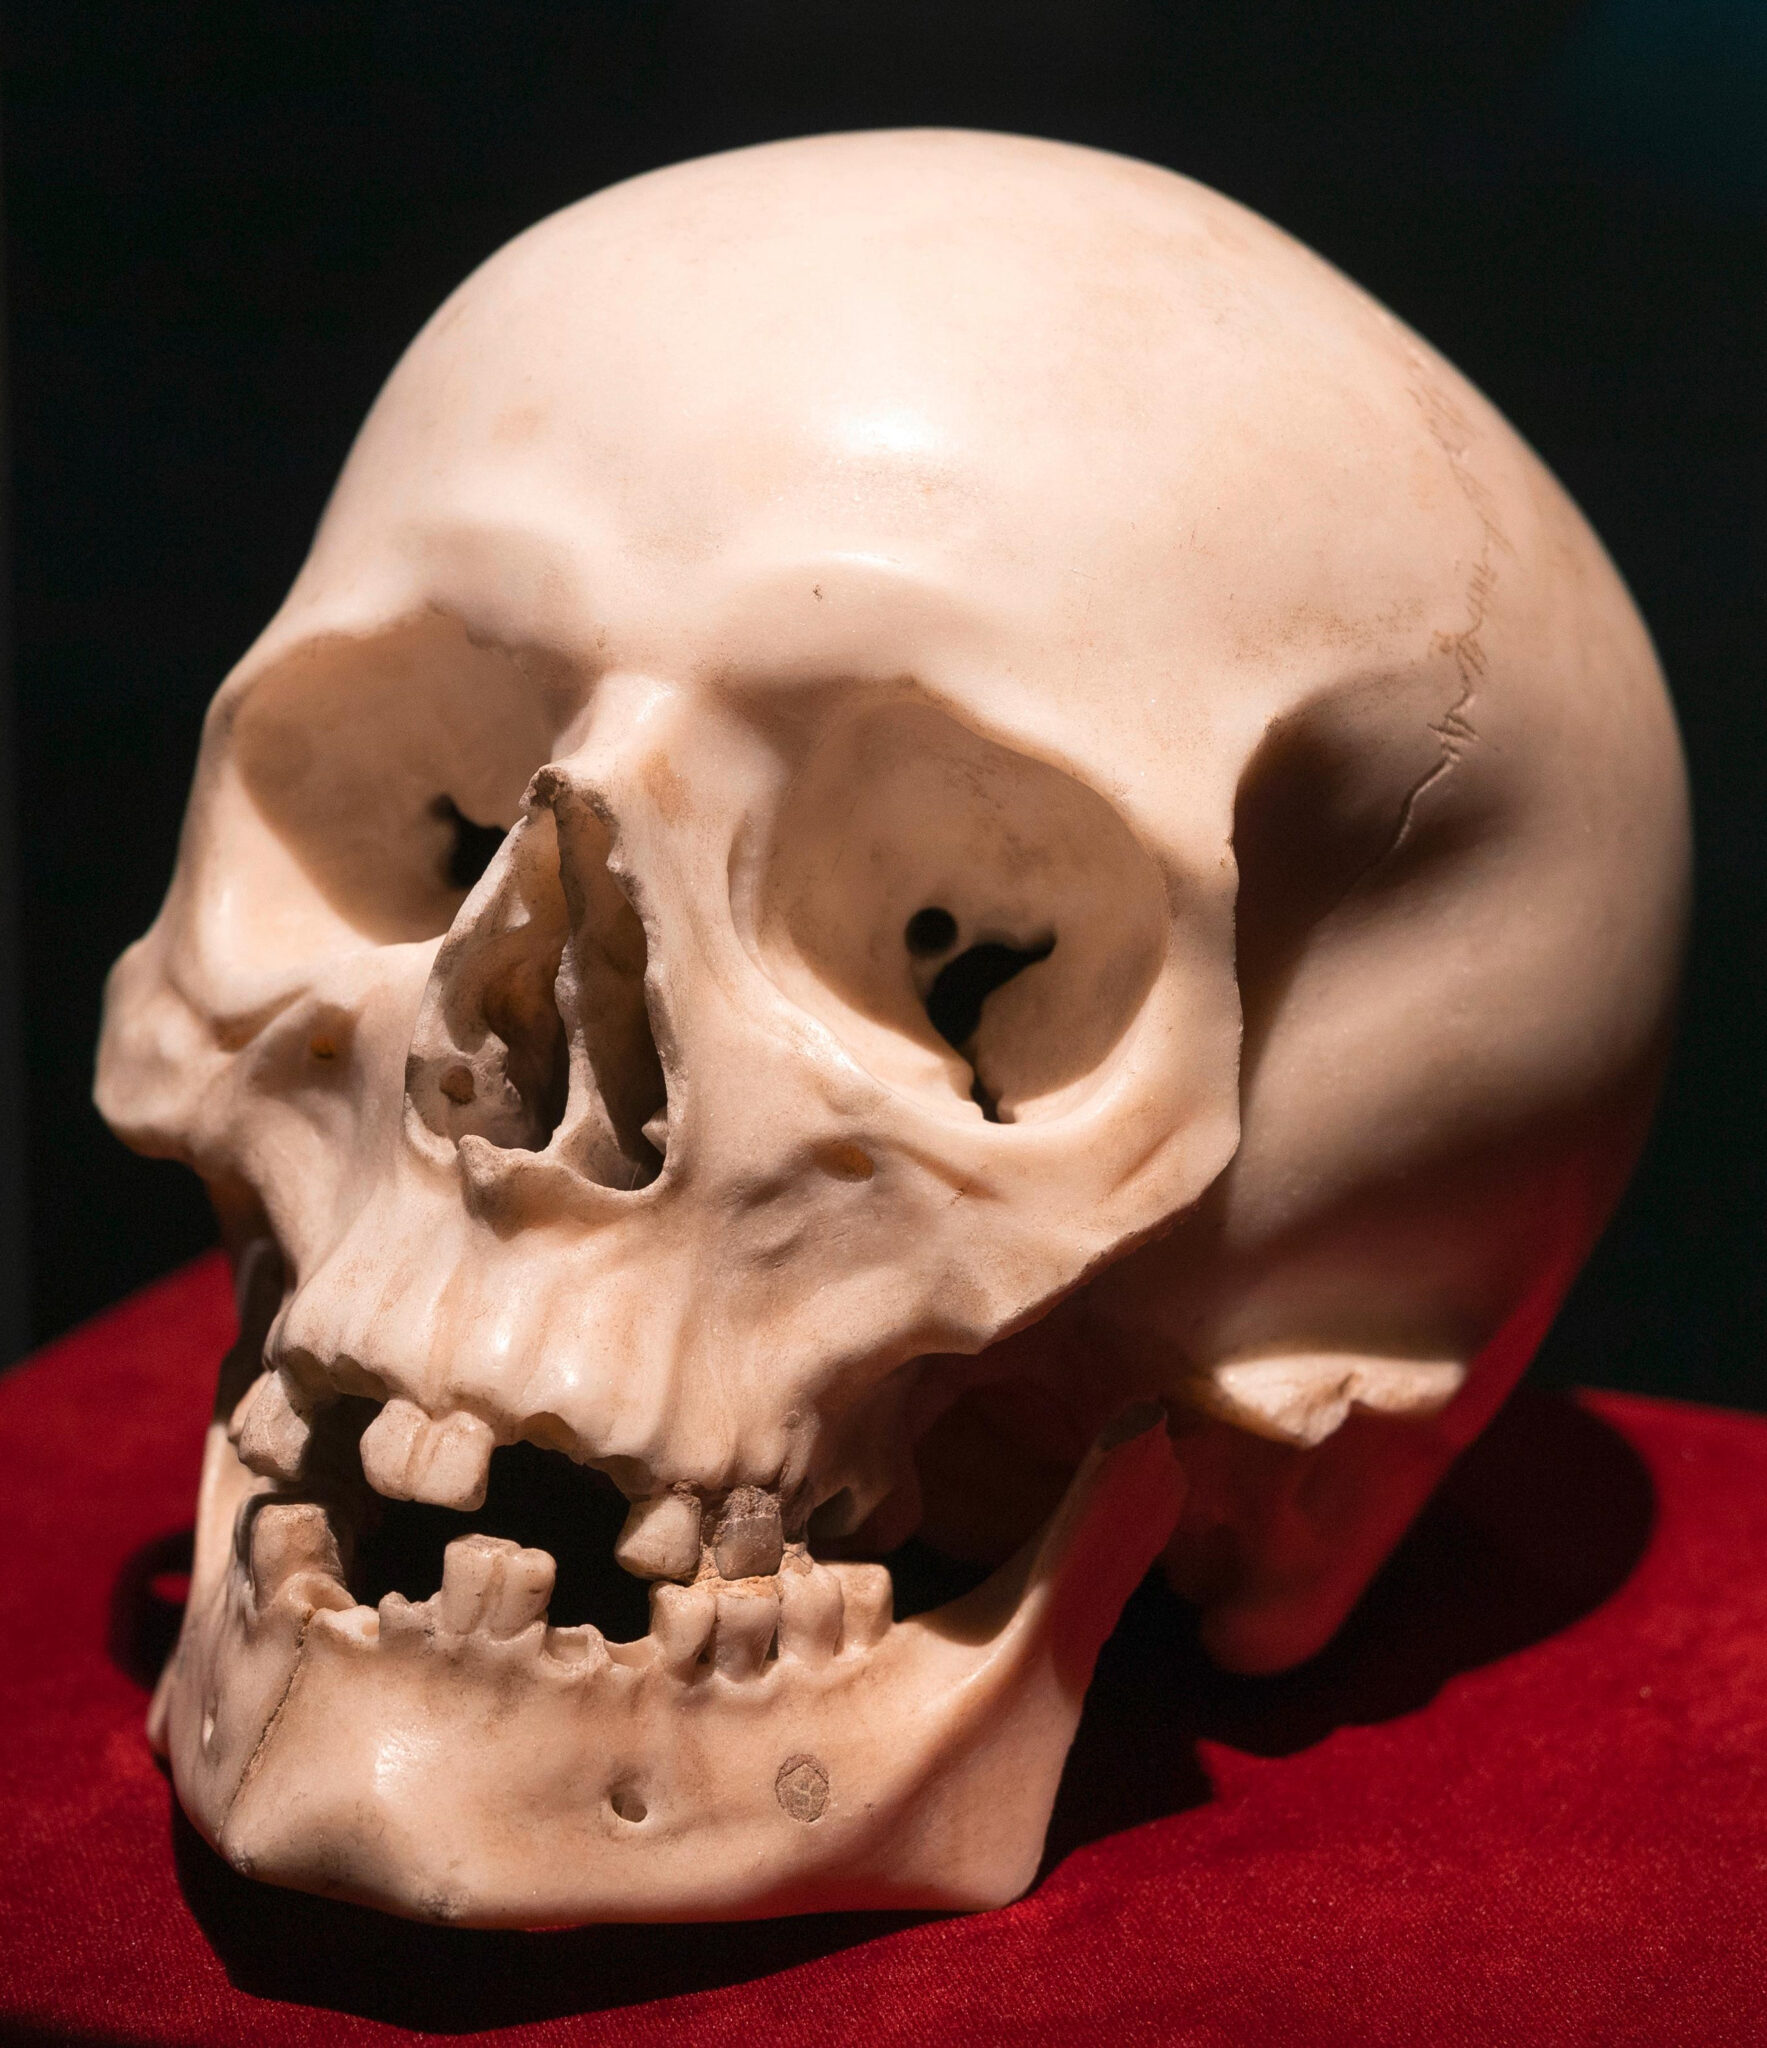 Forensic anthropological analysis done on Bernini marble skull